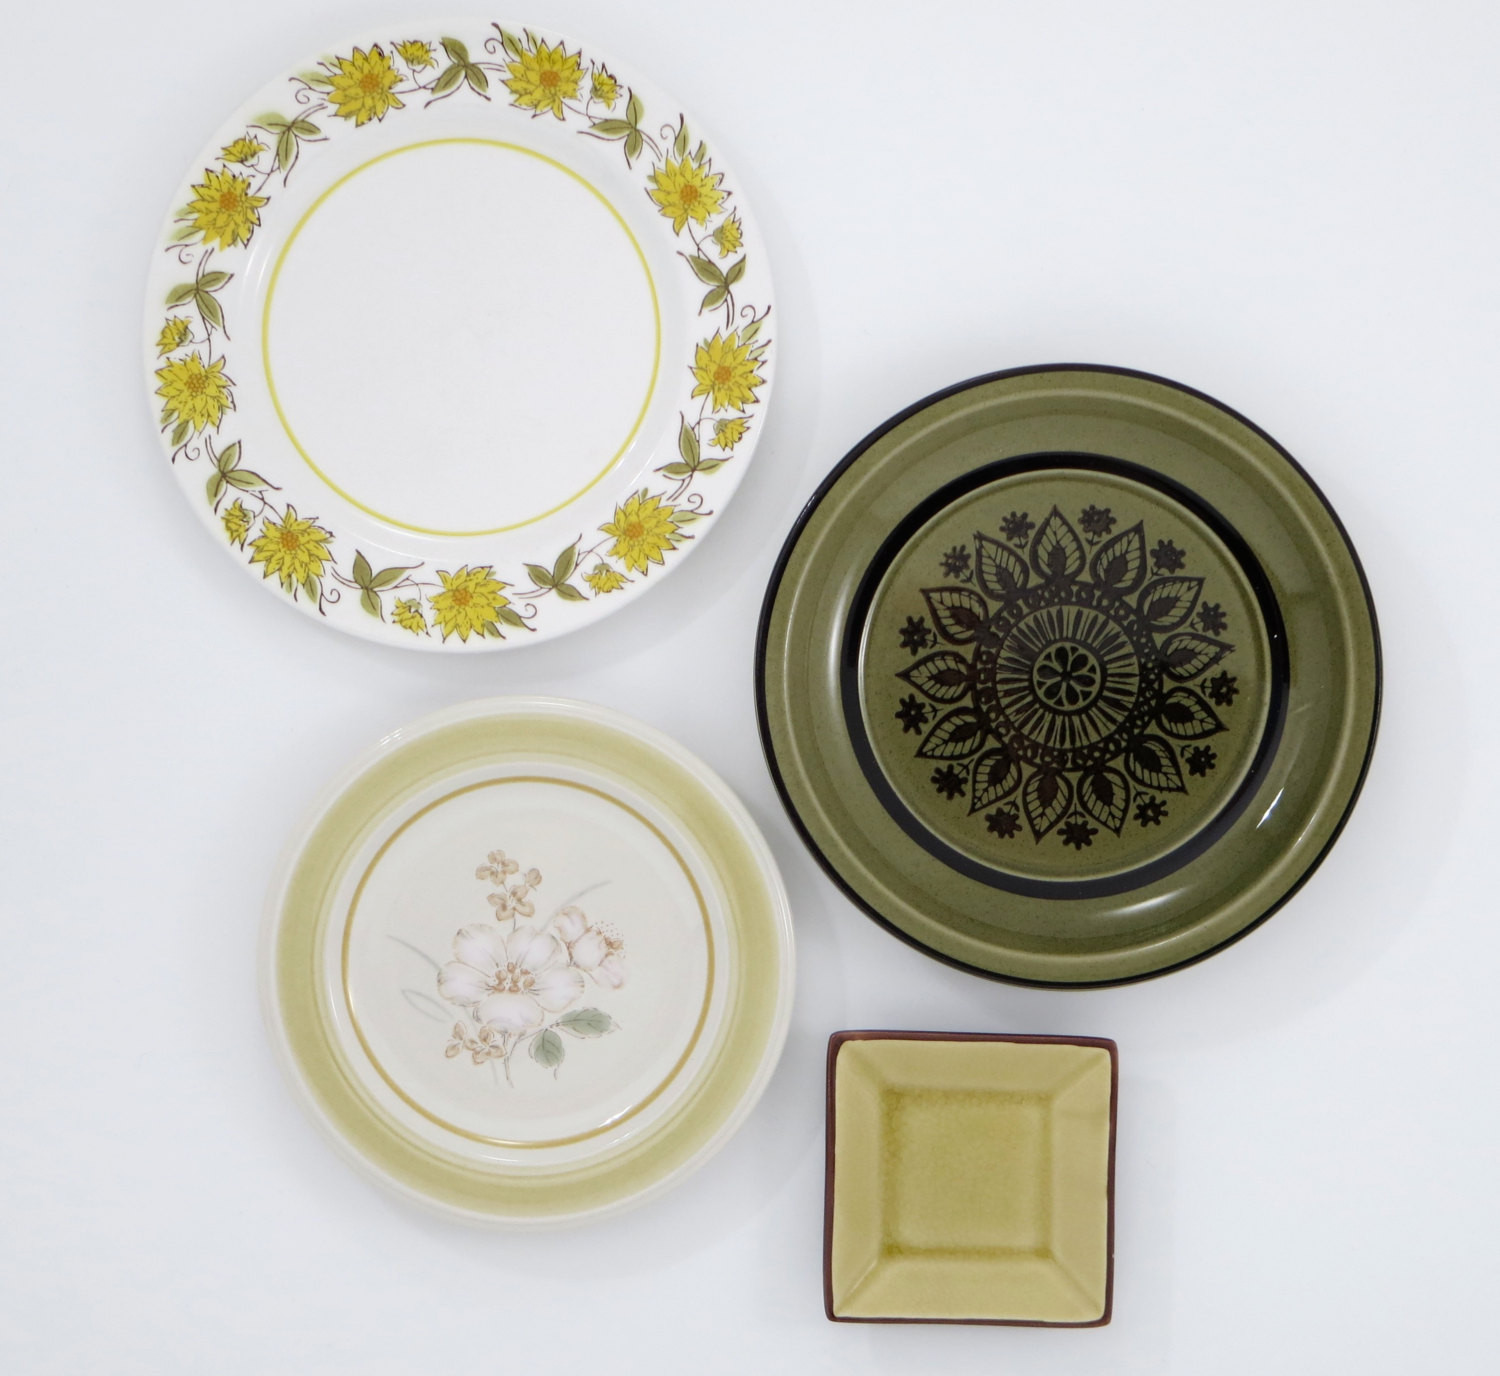 Decorative Plates For Kitchen Wall
 Decorative Plates Kitchen Wall Decor Shabby by